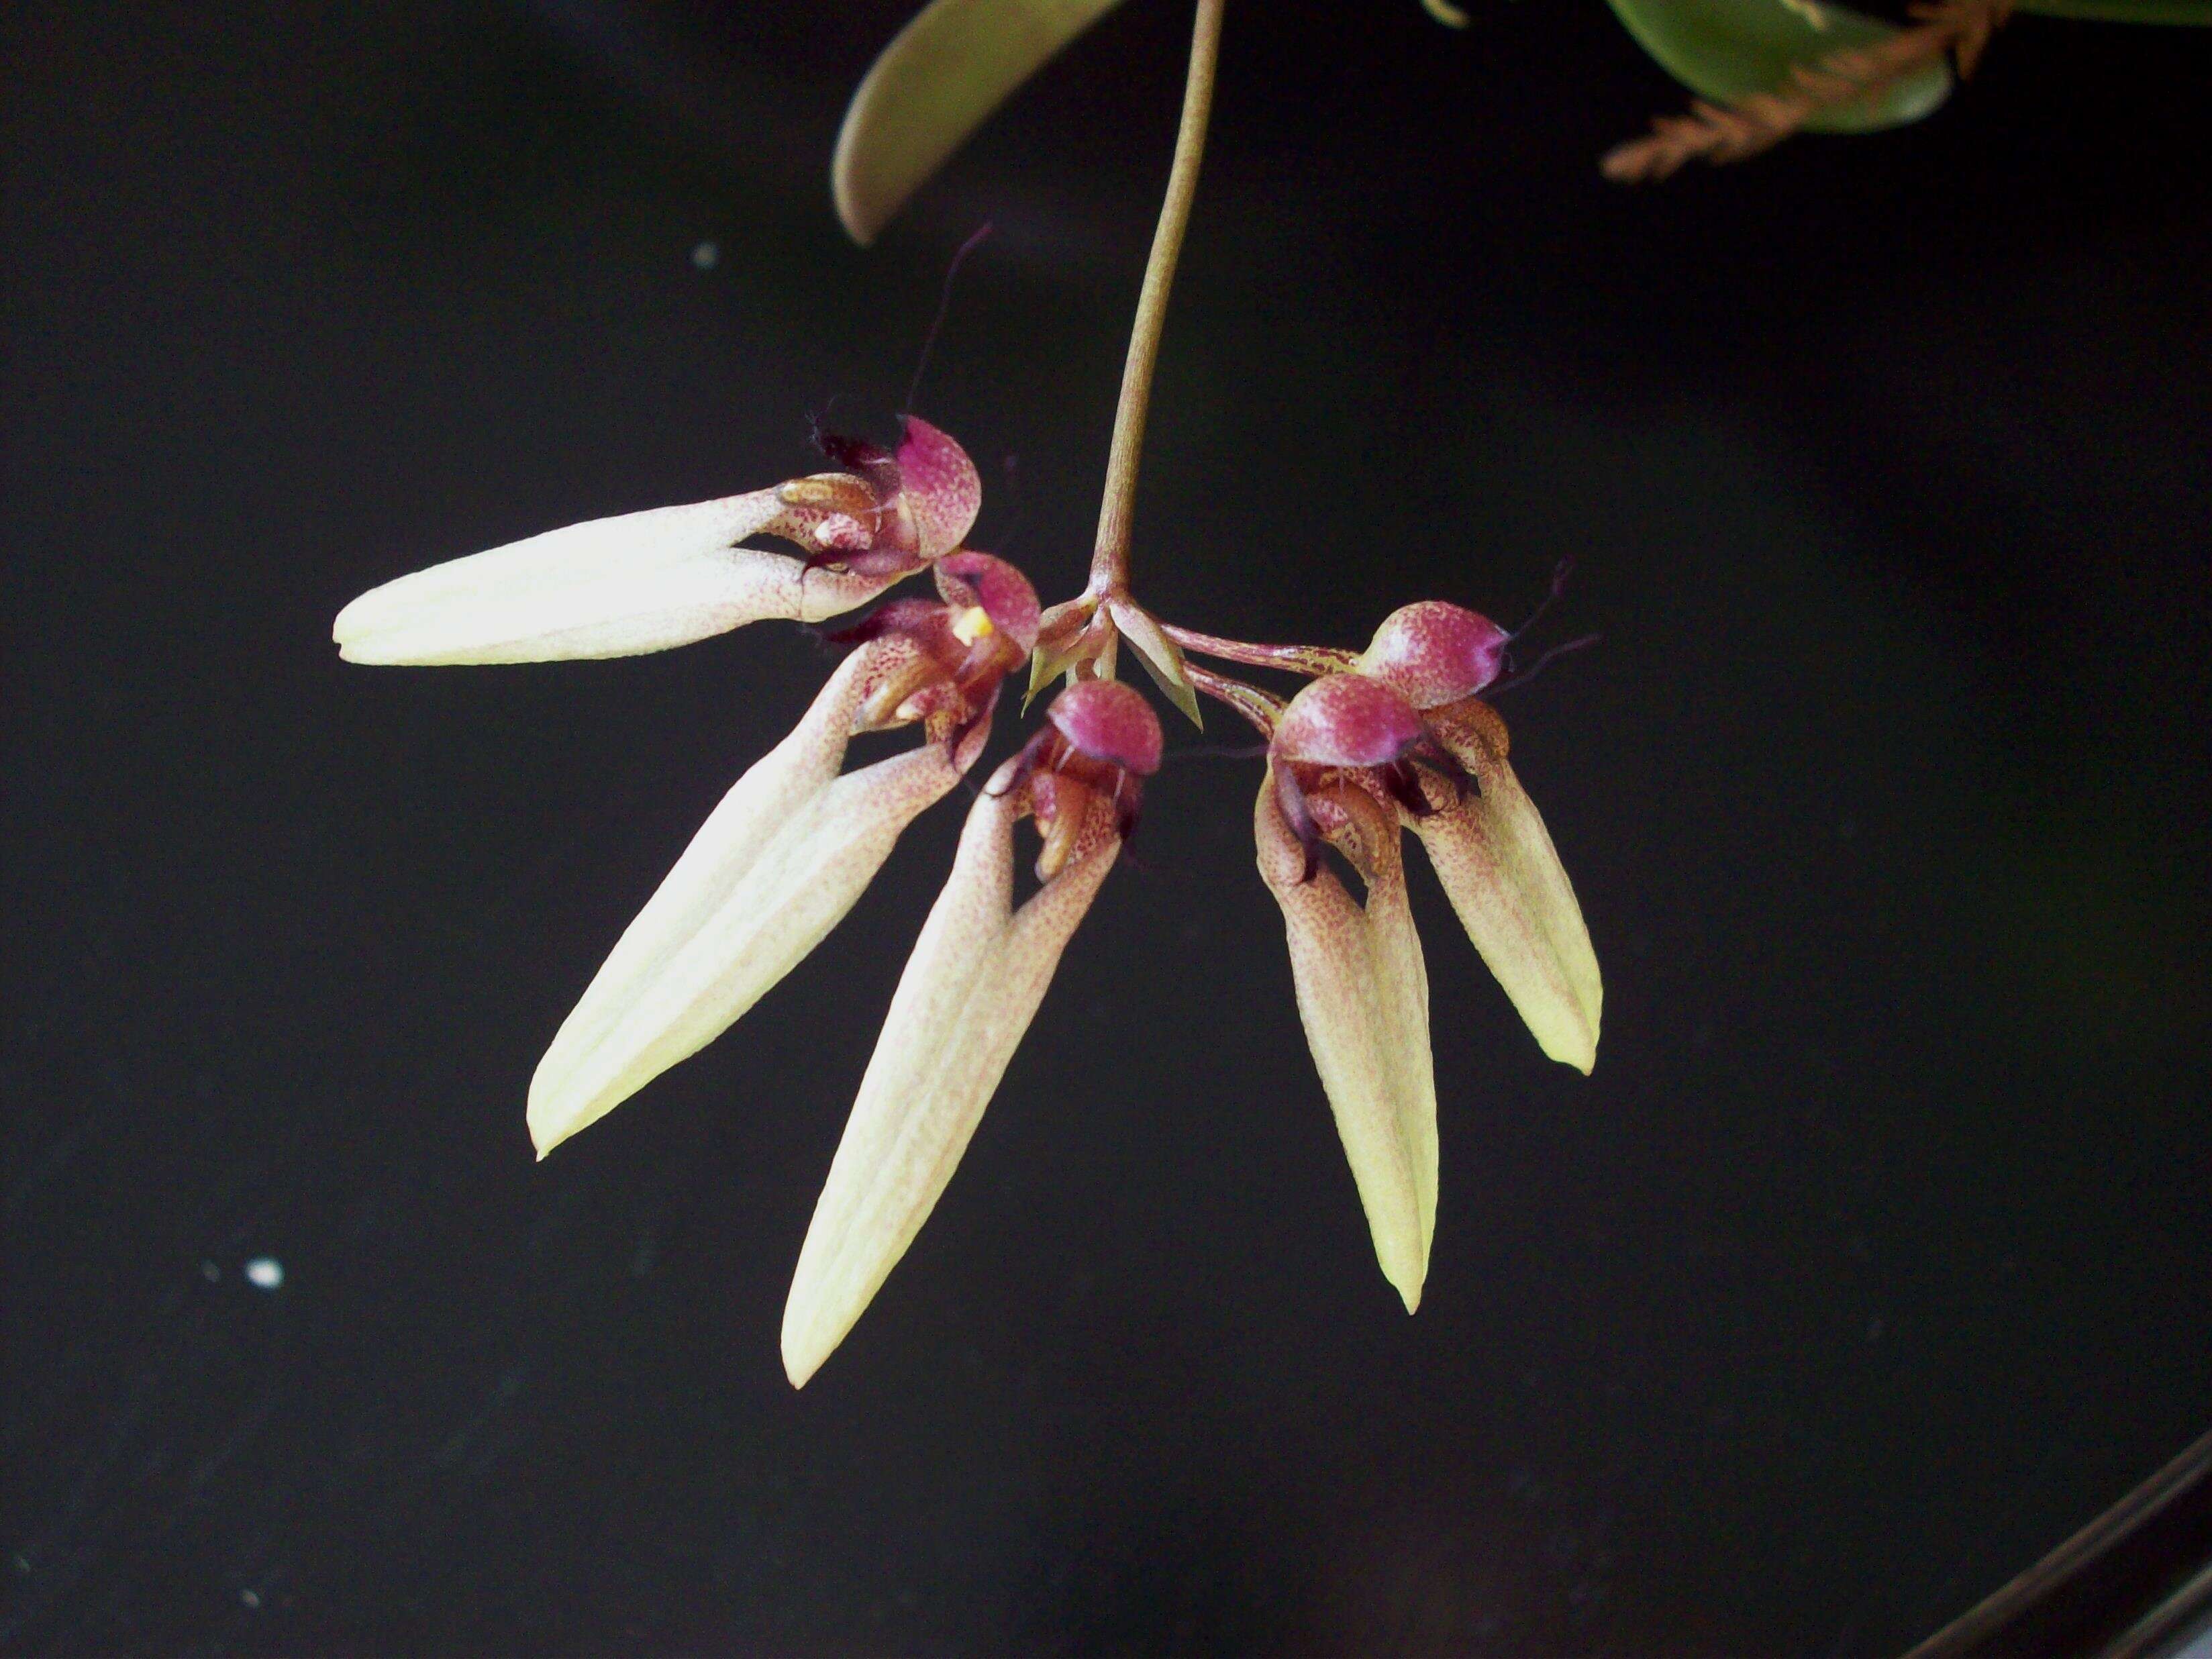 Image of Pale umbrella orchid